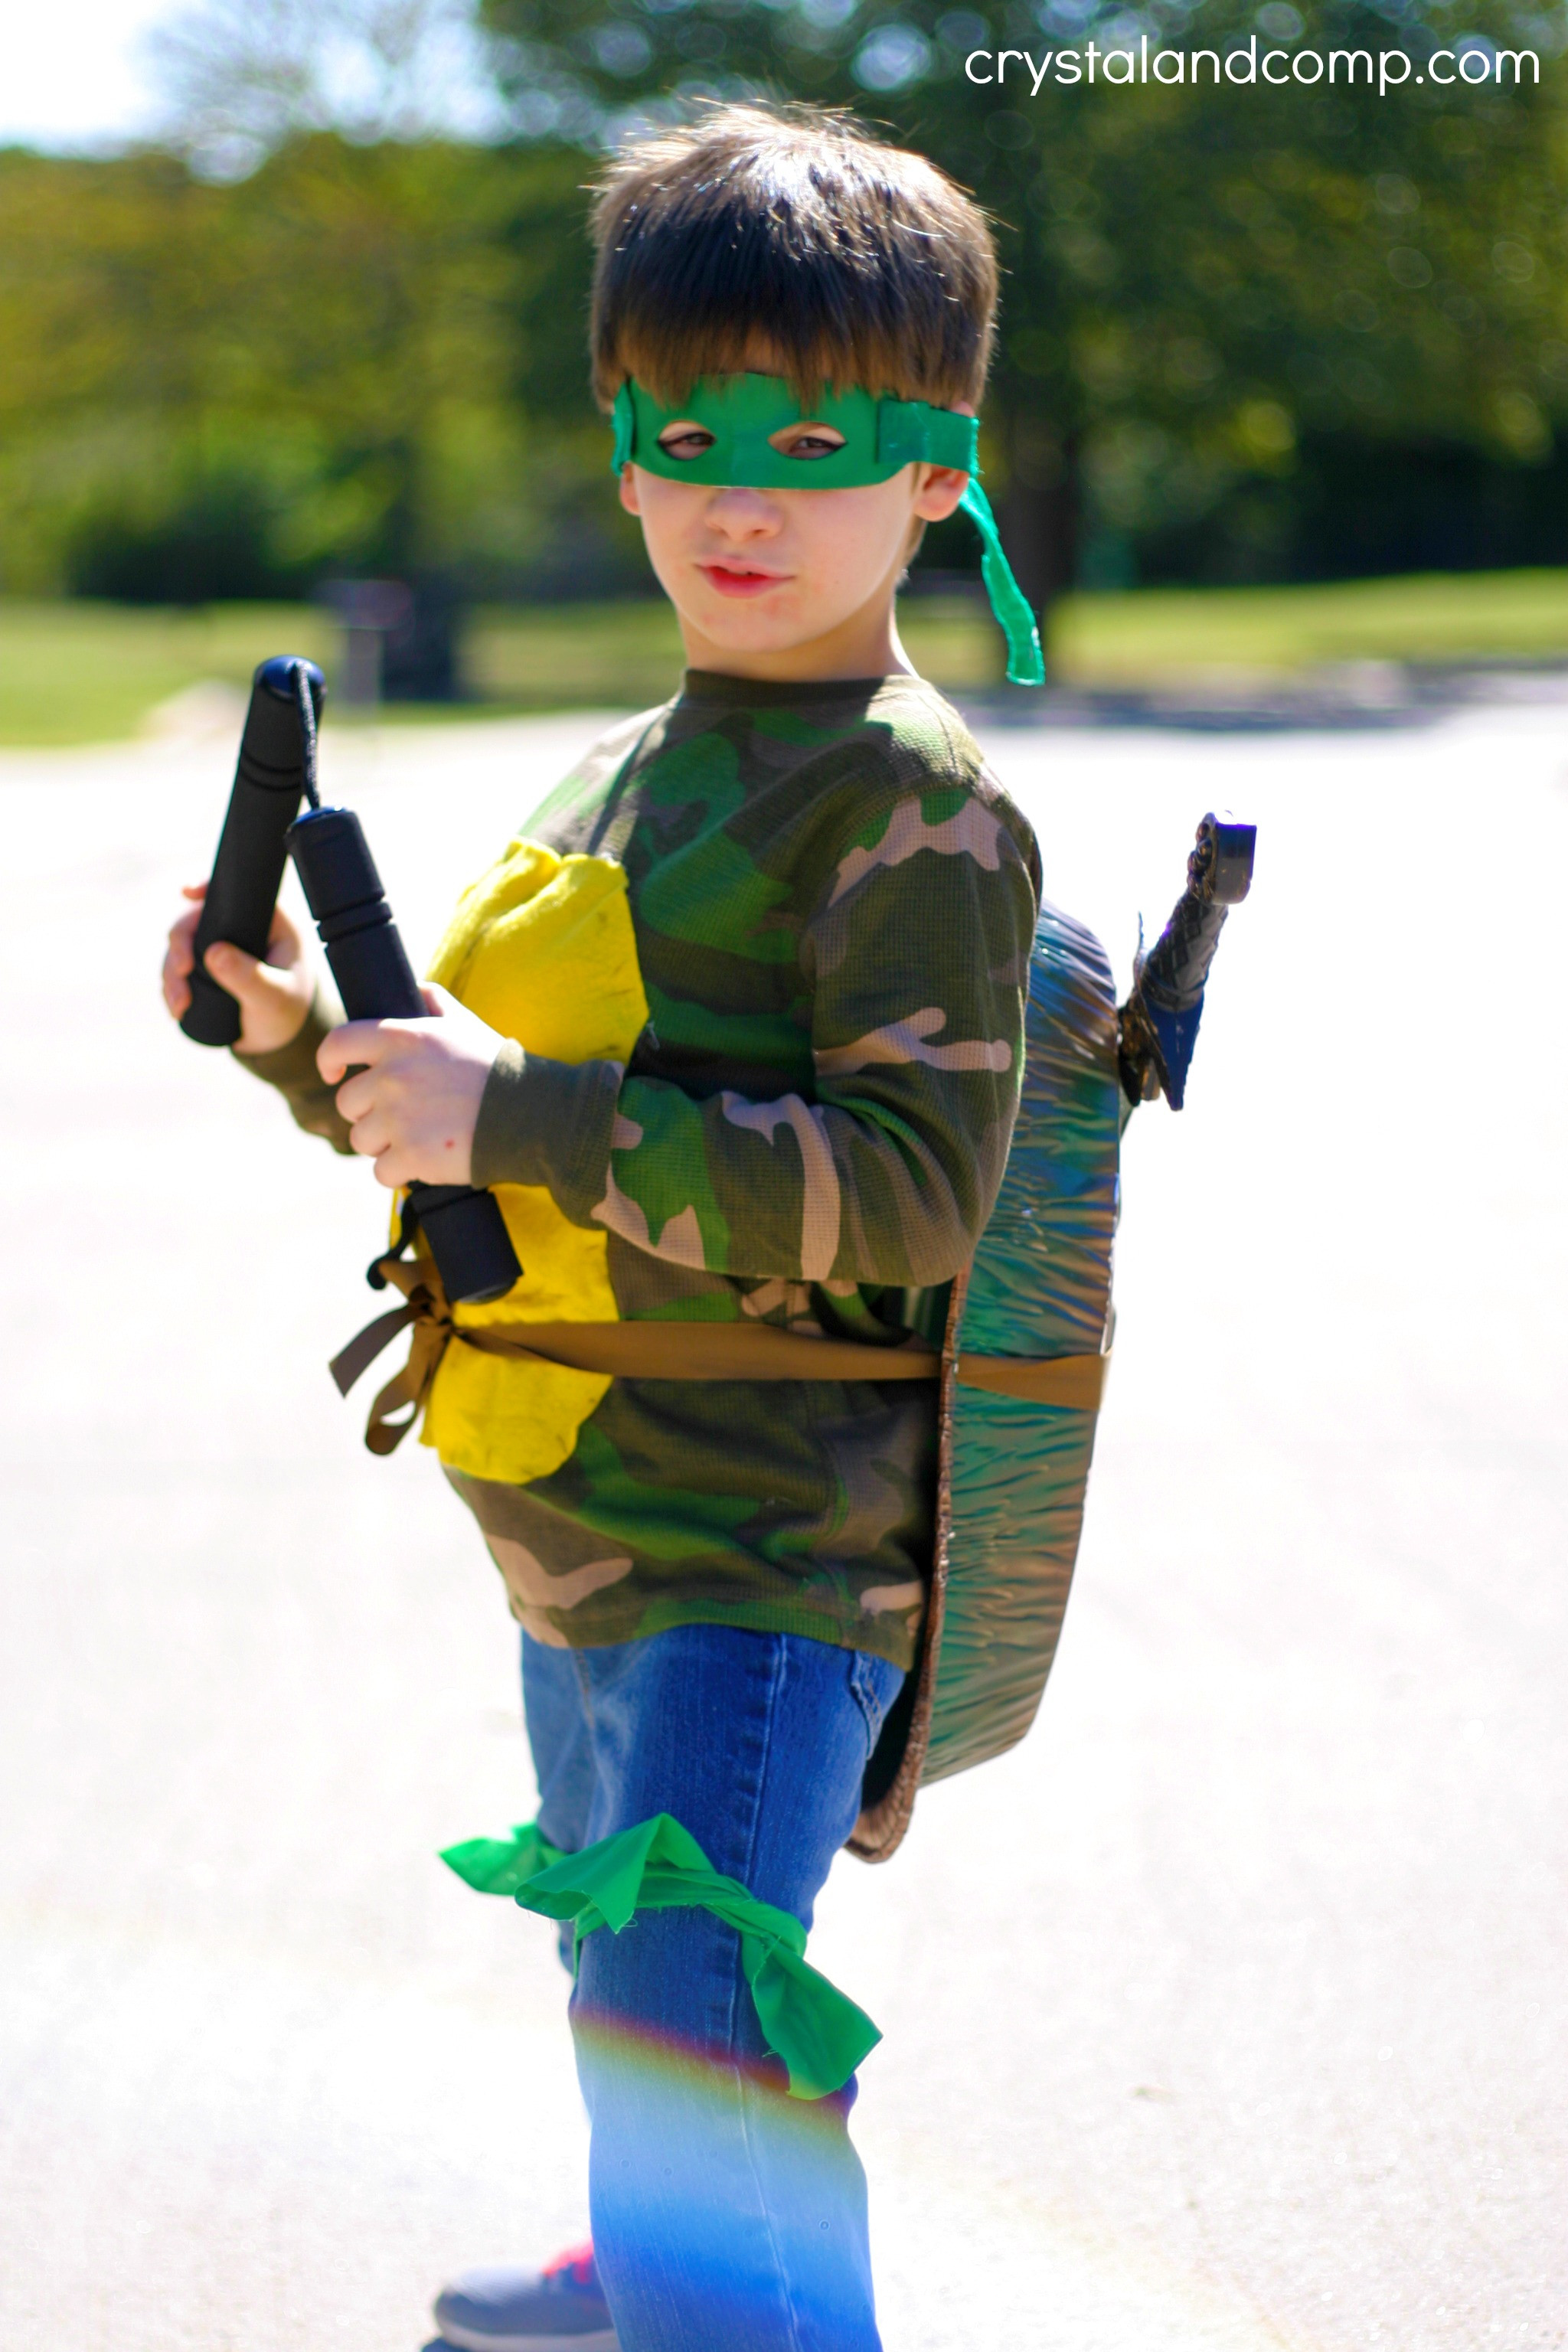 Best ideas about Ninja Turtle DIY Costume
. Save or Pin DIY Ninja Turtle Costume Now.